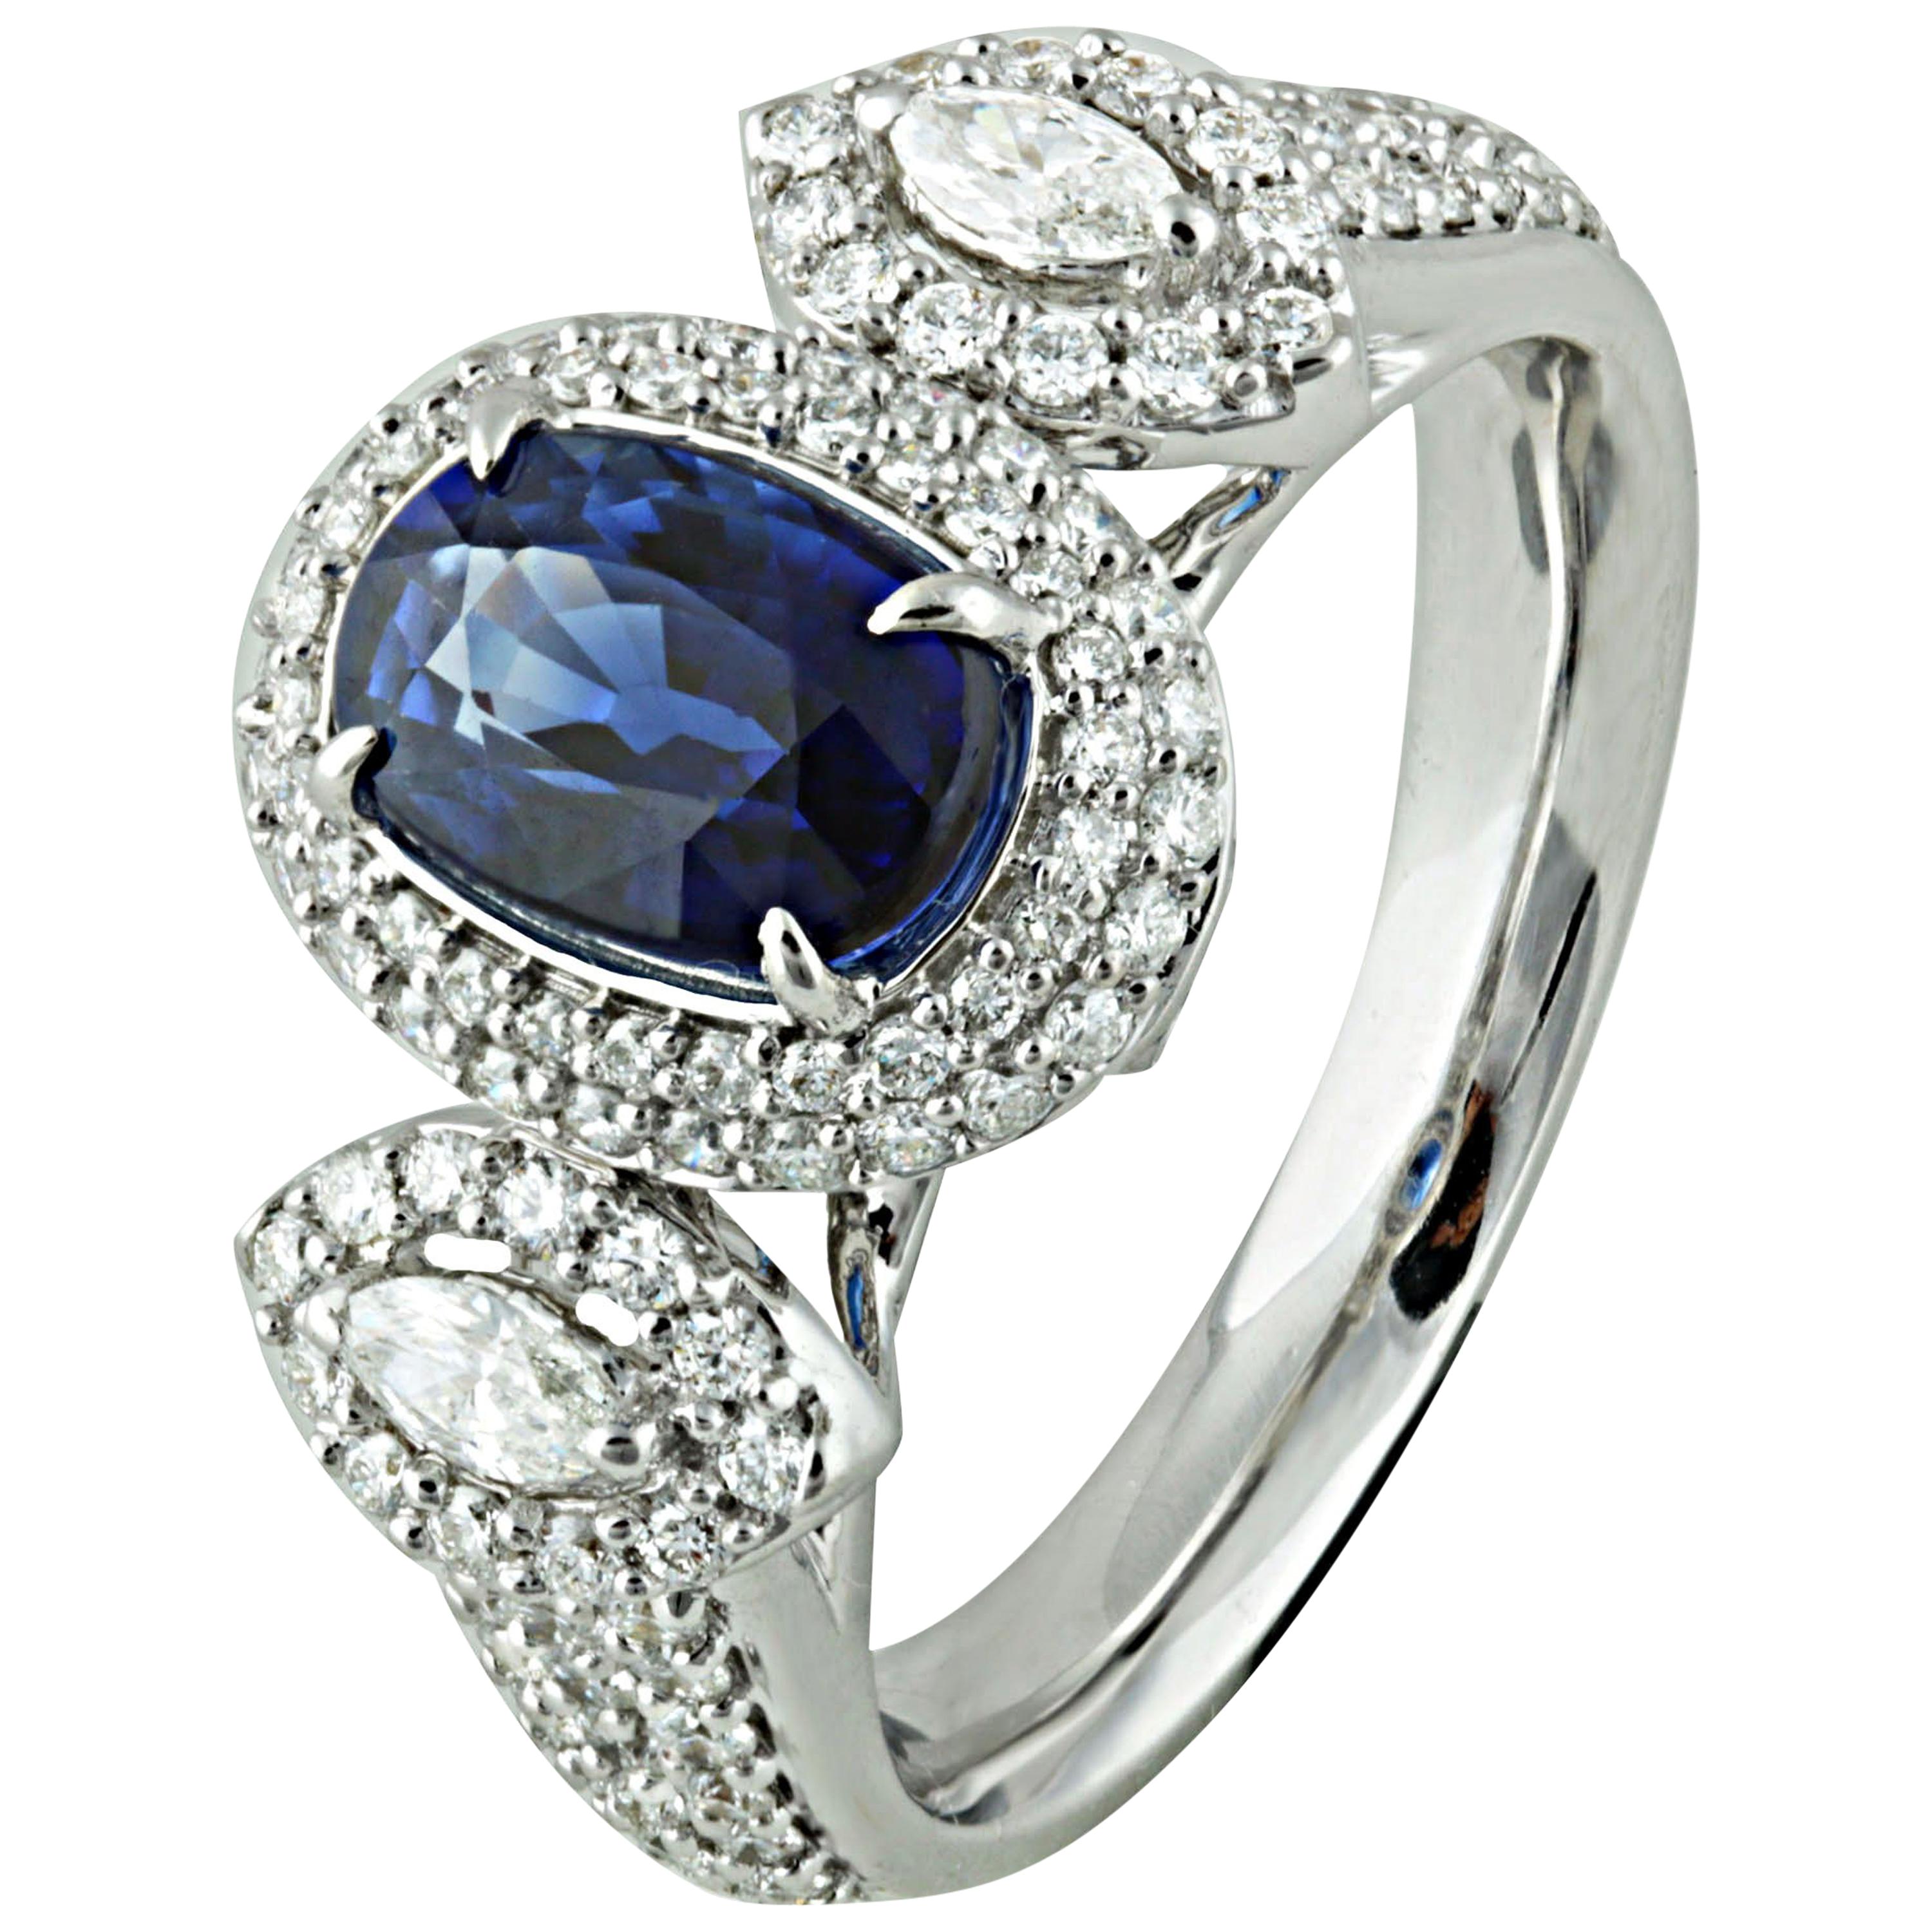 Studio Rêves 1.68 Carat Blue Sapphire and Diamond Ring in 18 Karat White Gold